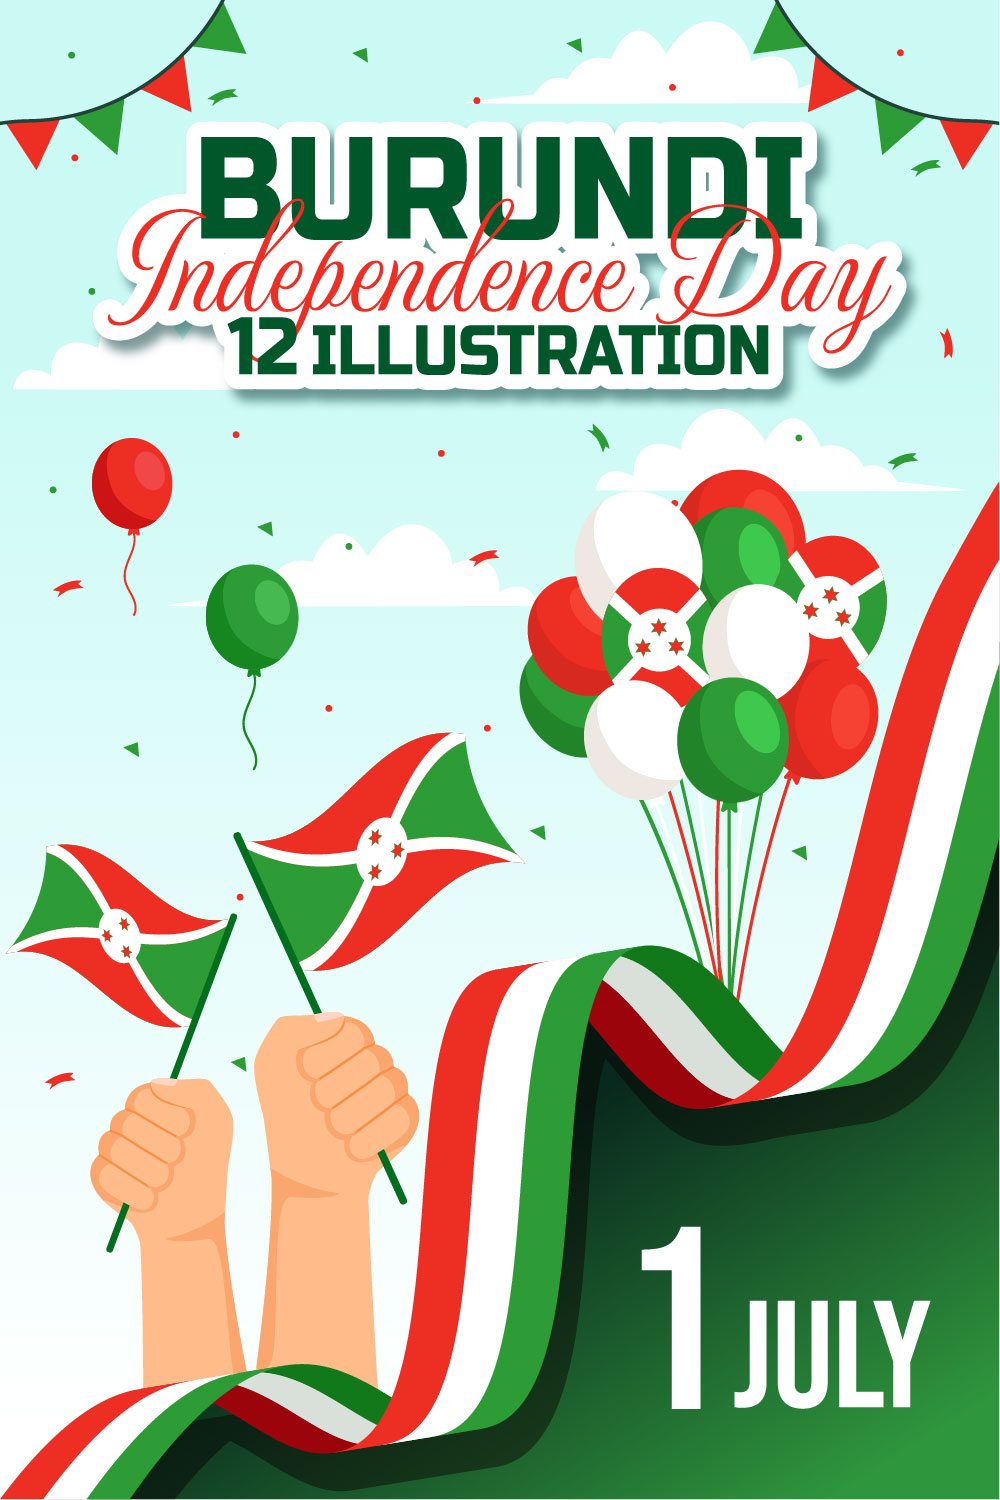 12 Burundi Independence Day Illustration pinterest preview image.